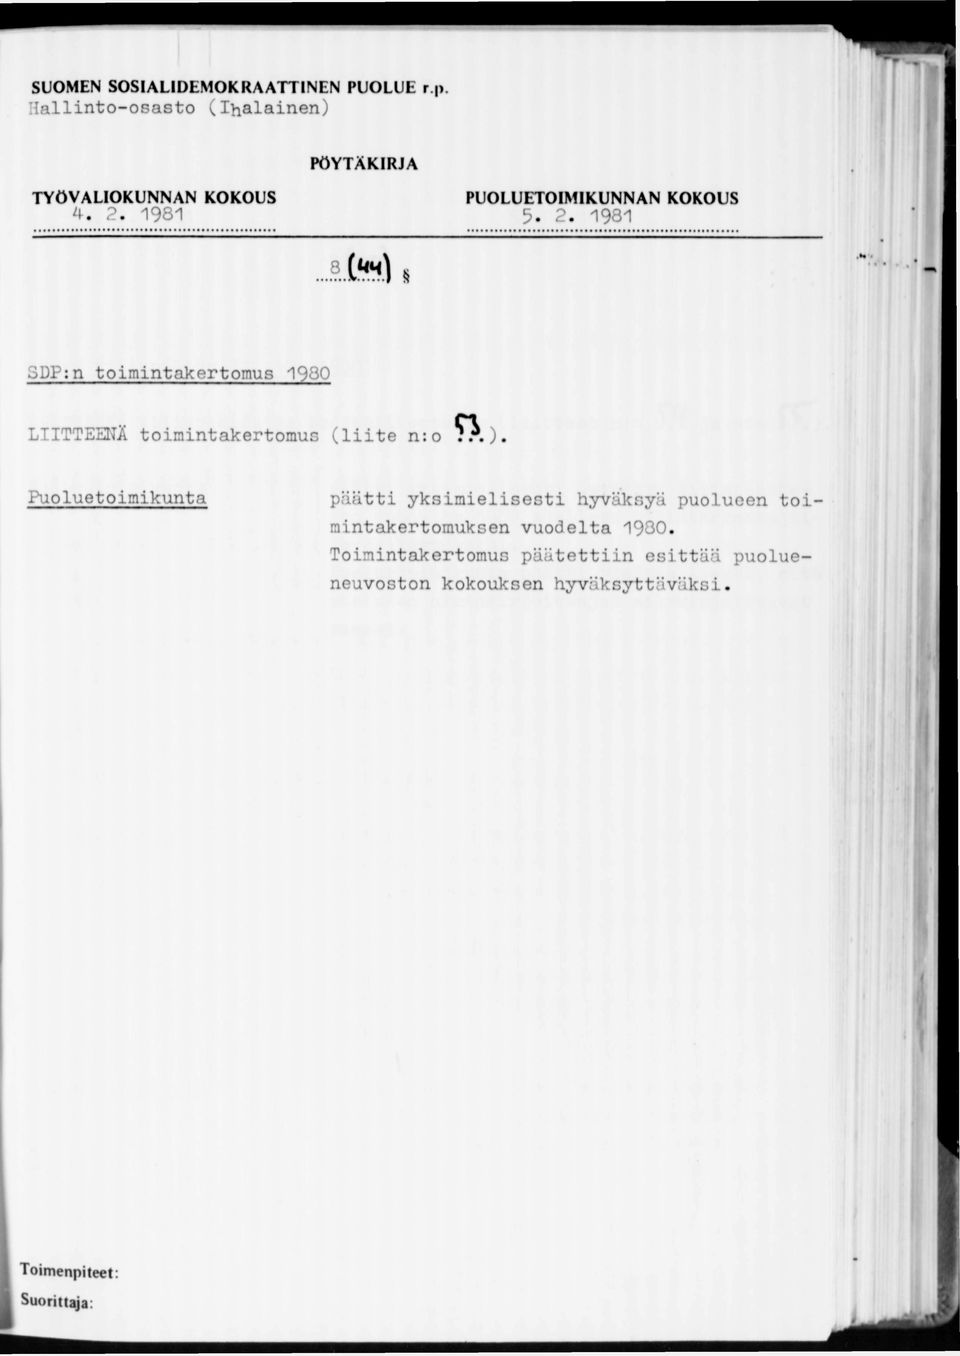 1981 SDP:n toimintakertomus 1980 LIITTEENÄ toimintakertomus (liite